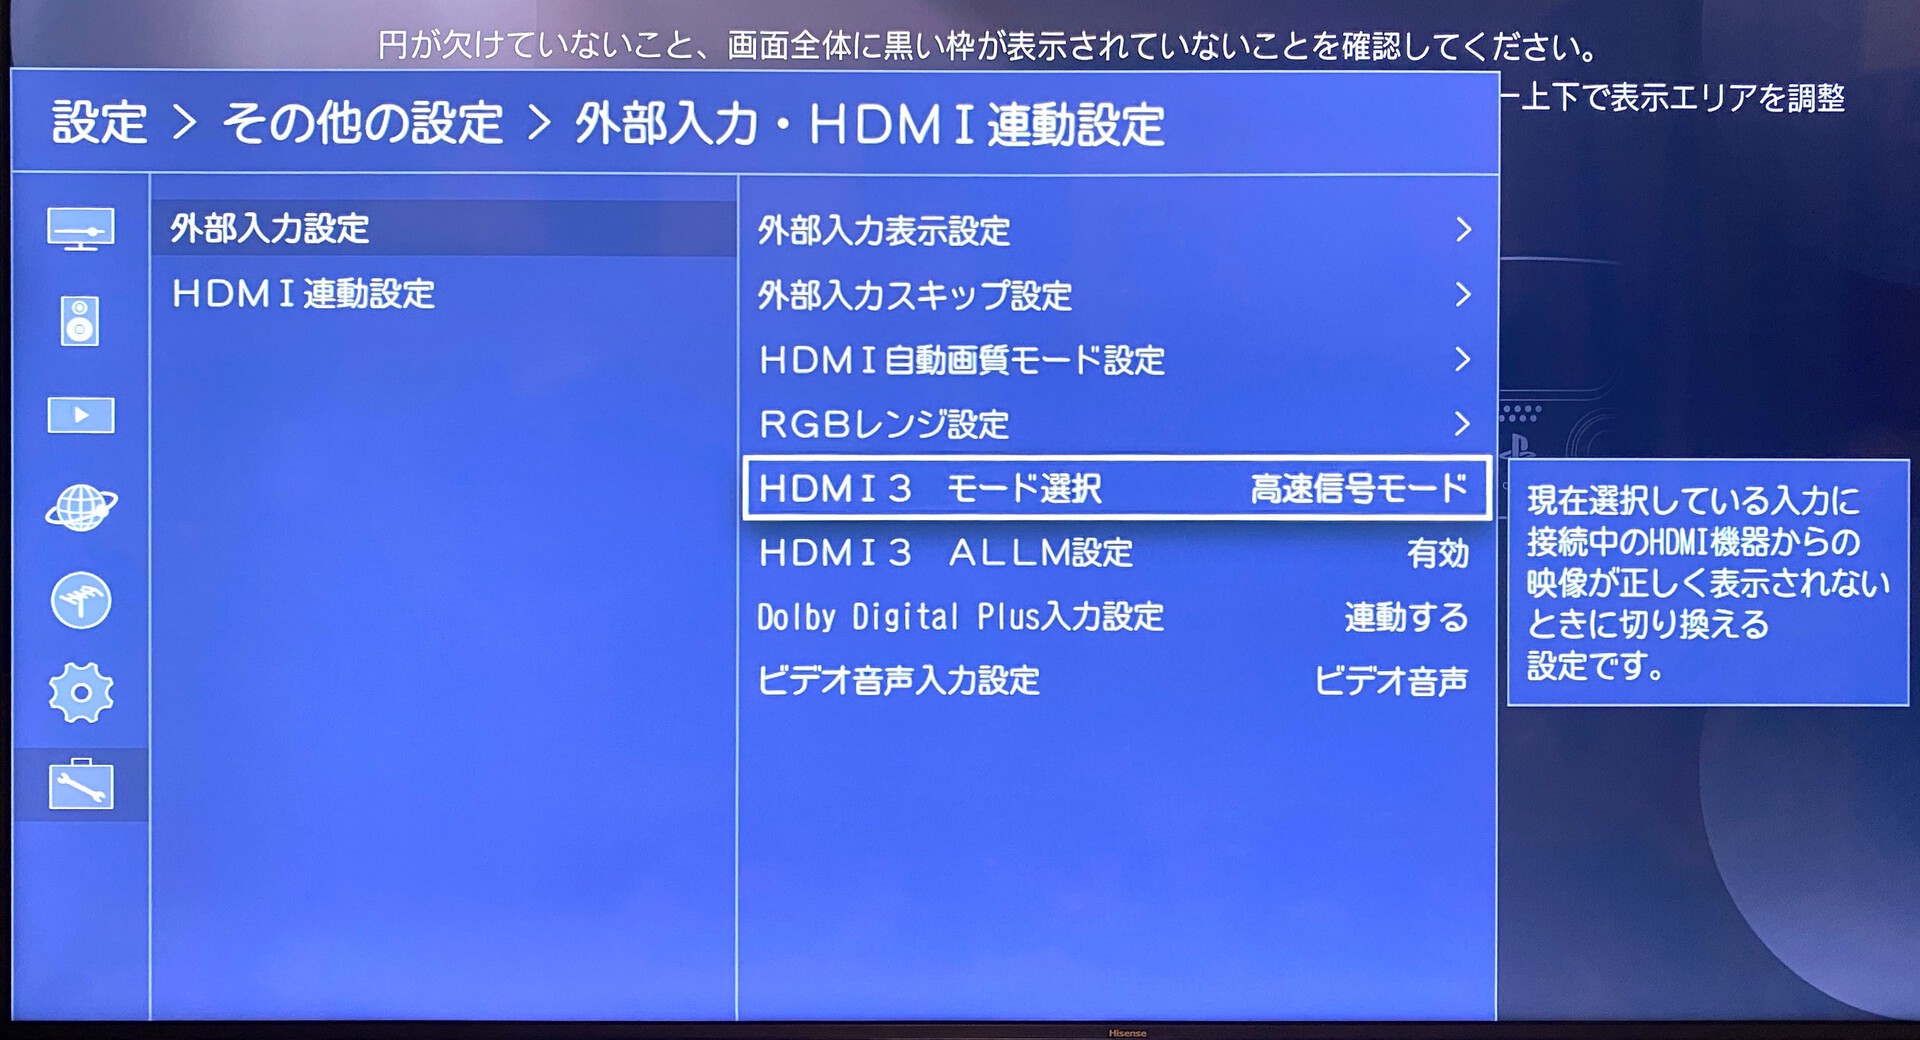 HDMI Mode select